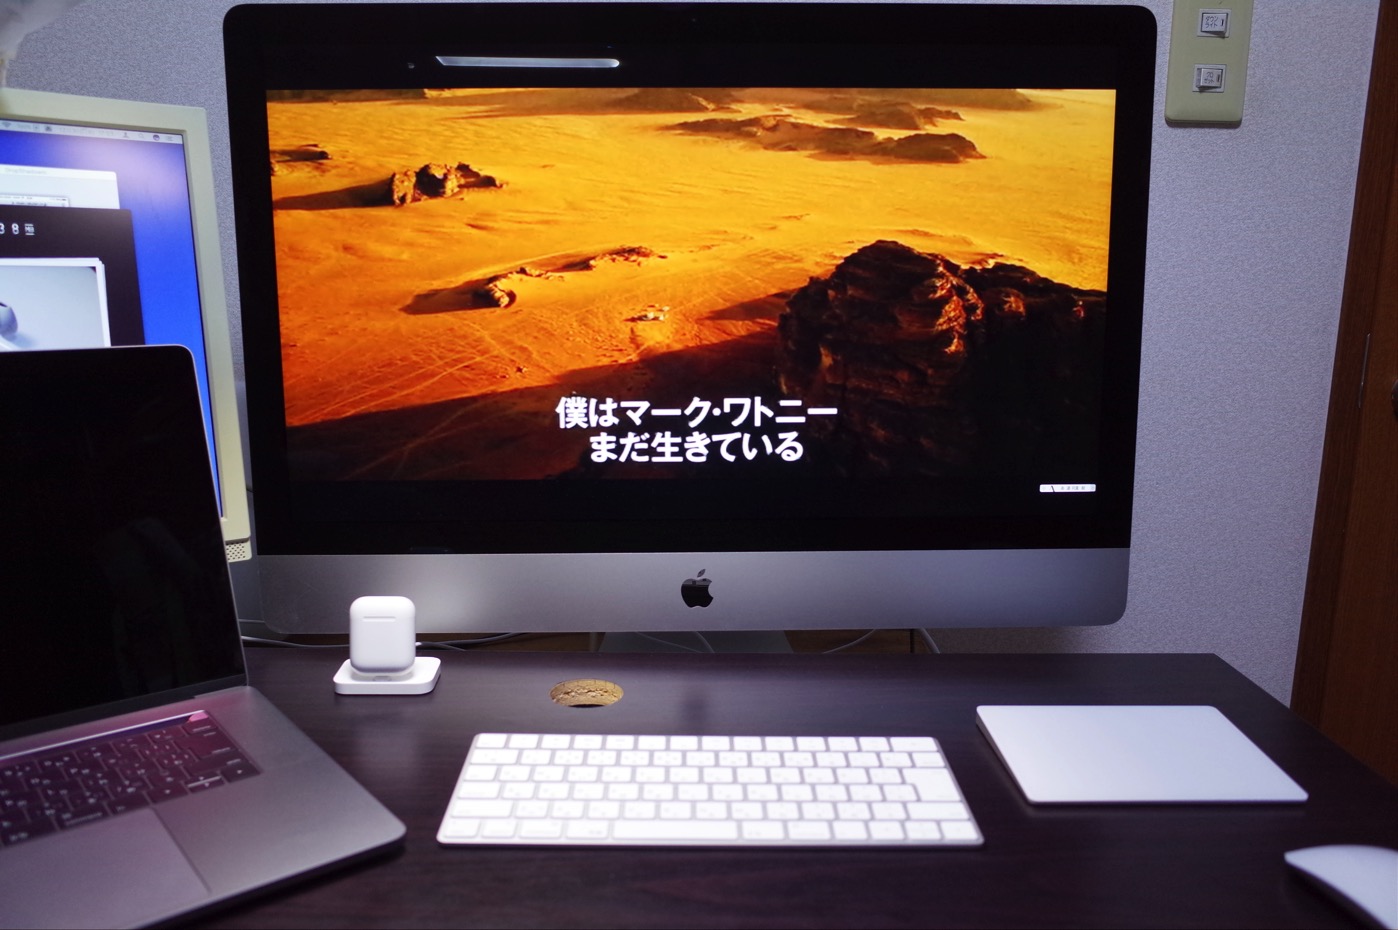 [Mac]新型MacBook Pro 15″ が手元に届いたあとに追加でAppleCare Protection に登録してみたよ